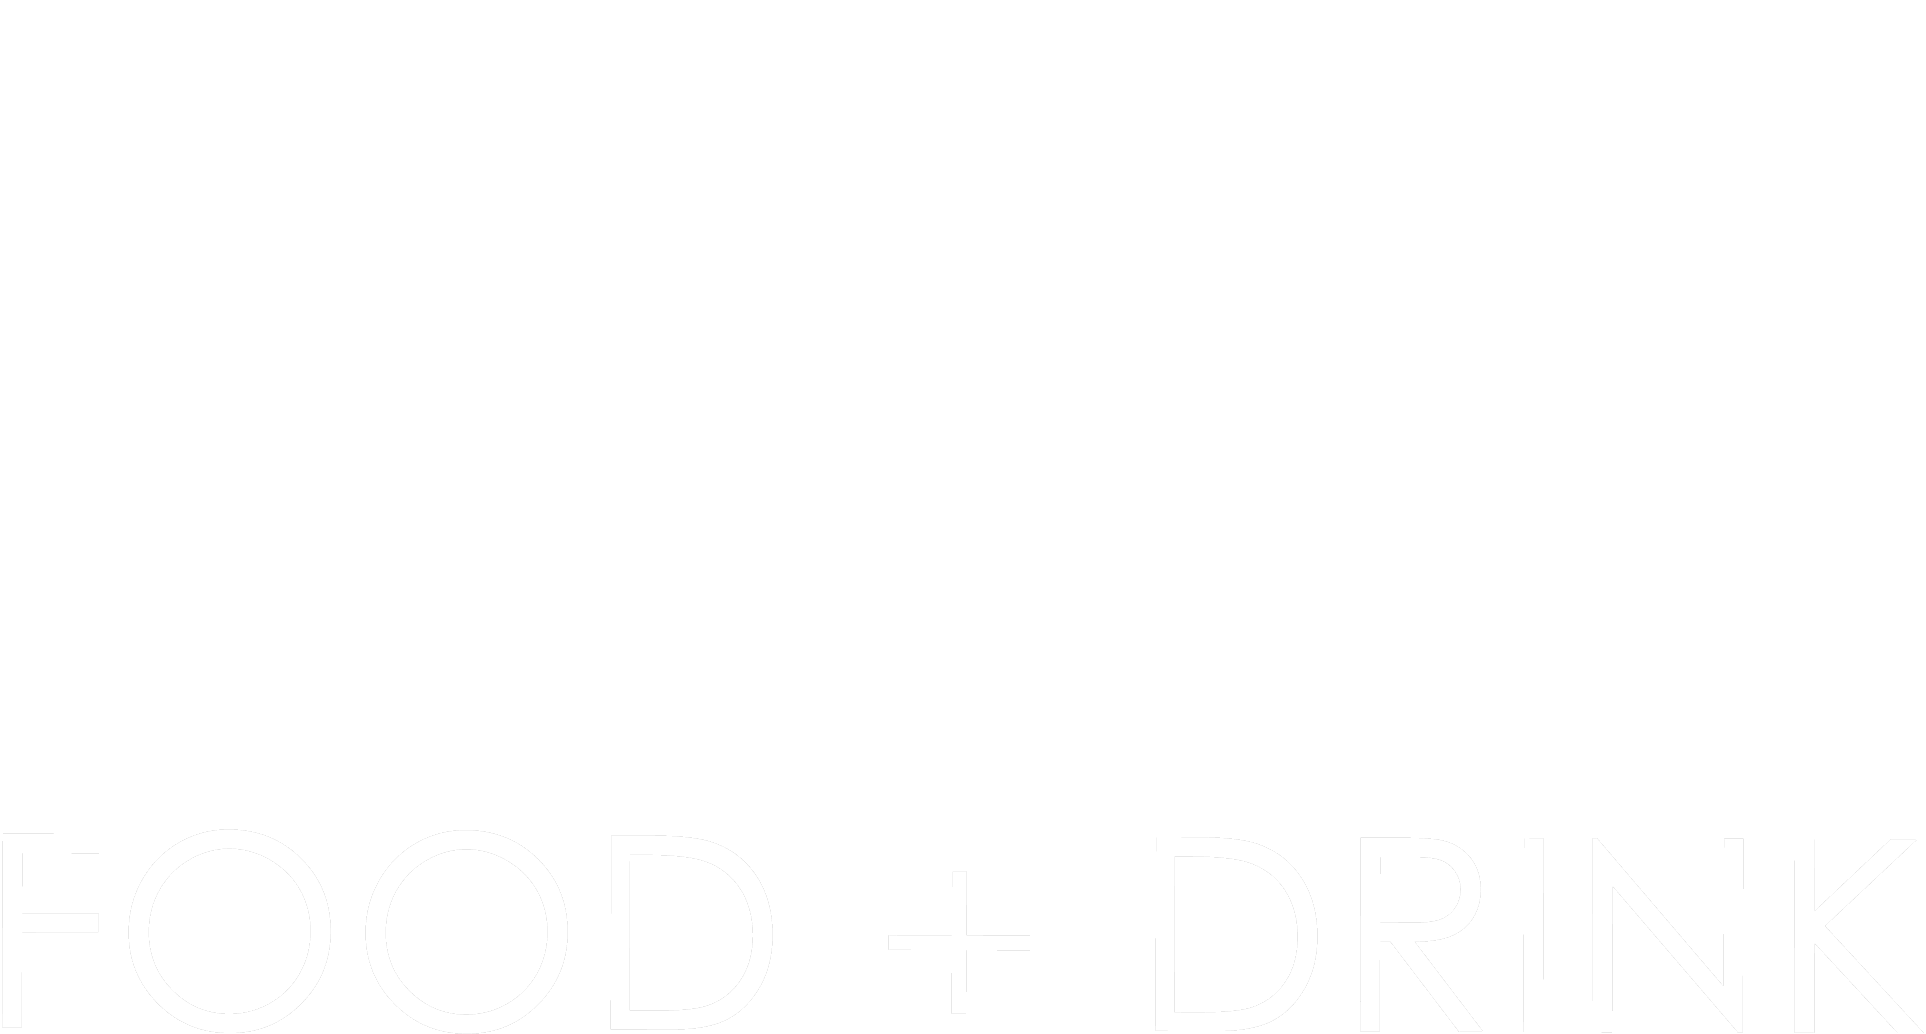 Luke'32 Bridge